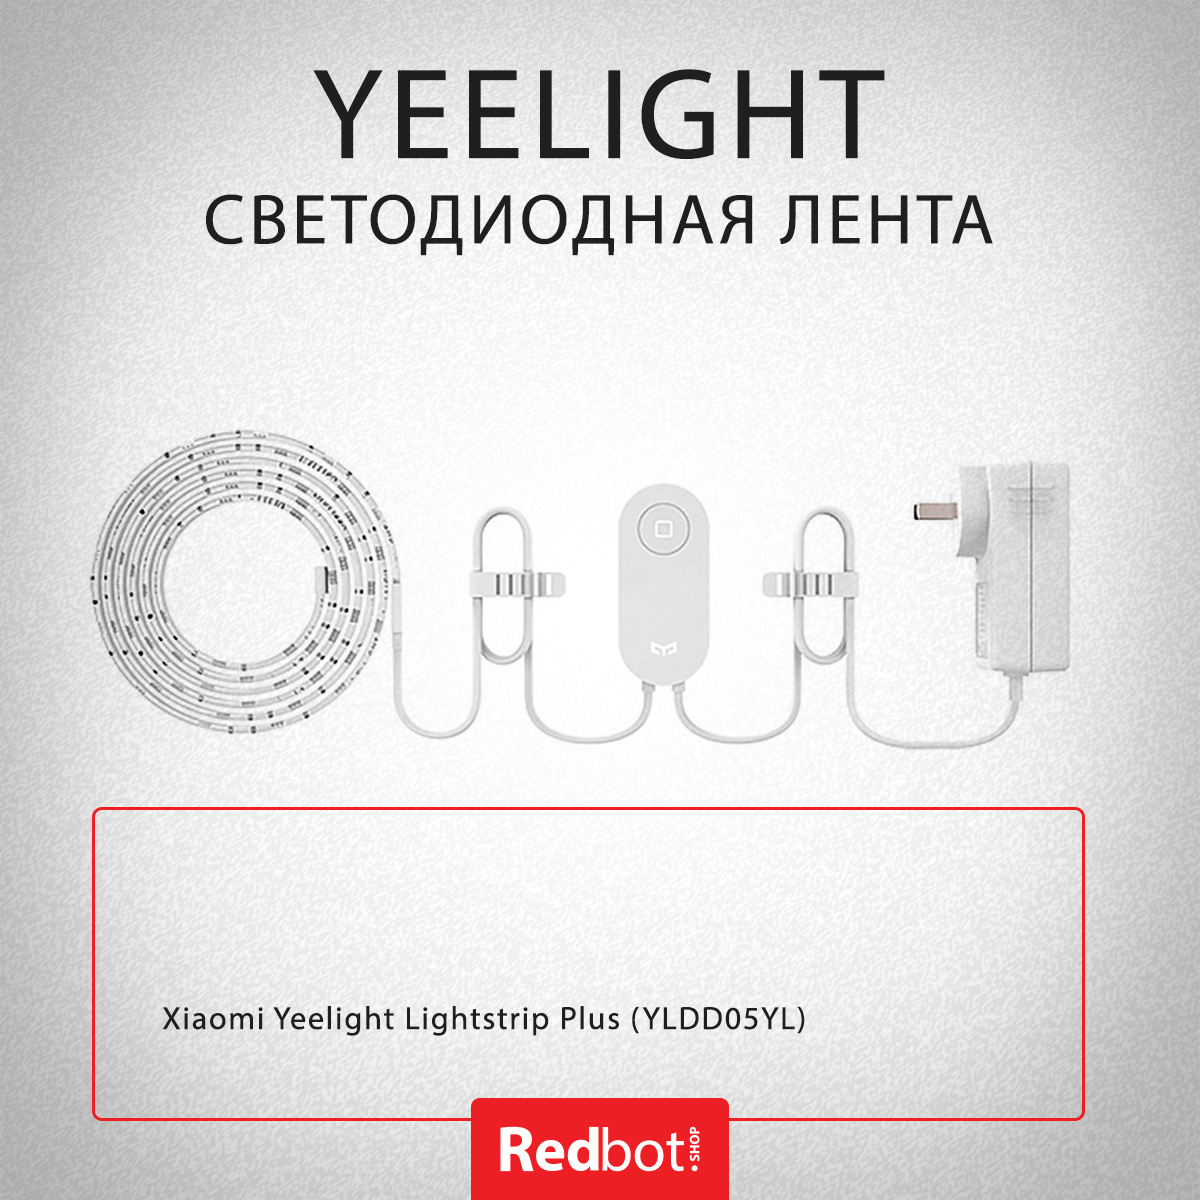 Yeelight Xiaomi Lightstrip Plus Yldd05yl